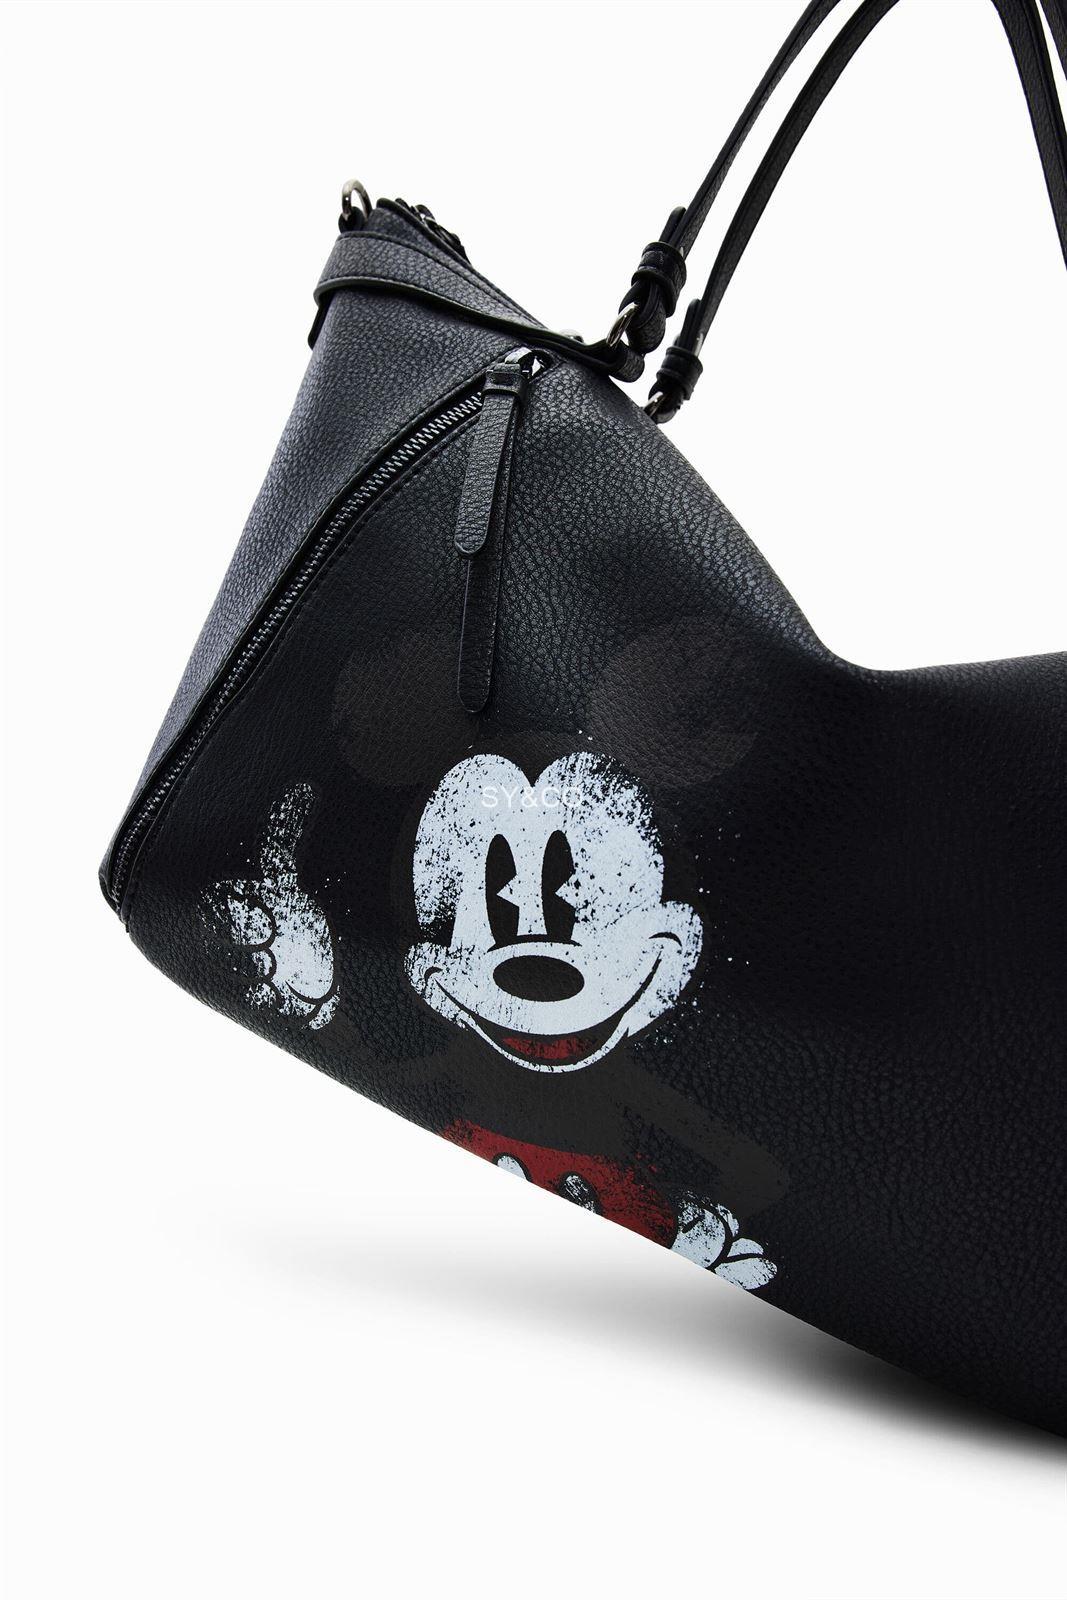 Bolso Desigual Mickey Mouse 22WAXPB0 - Imagen 5